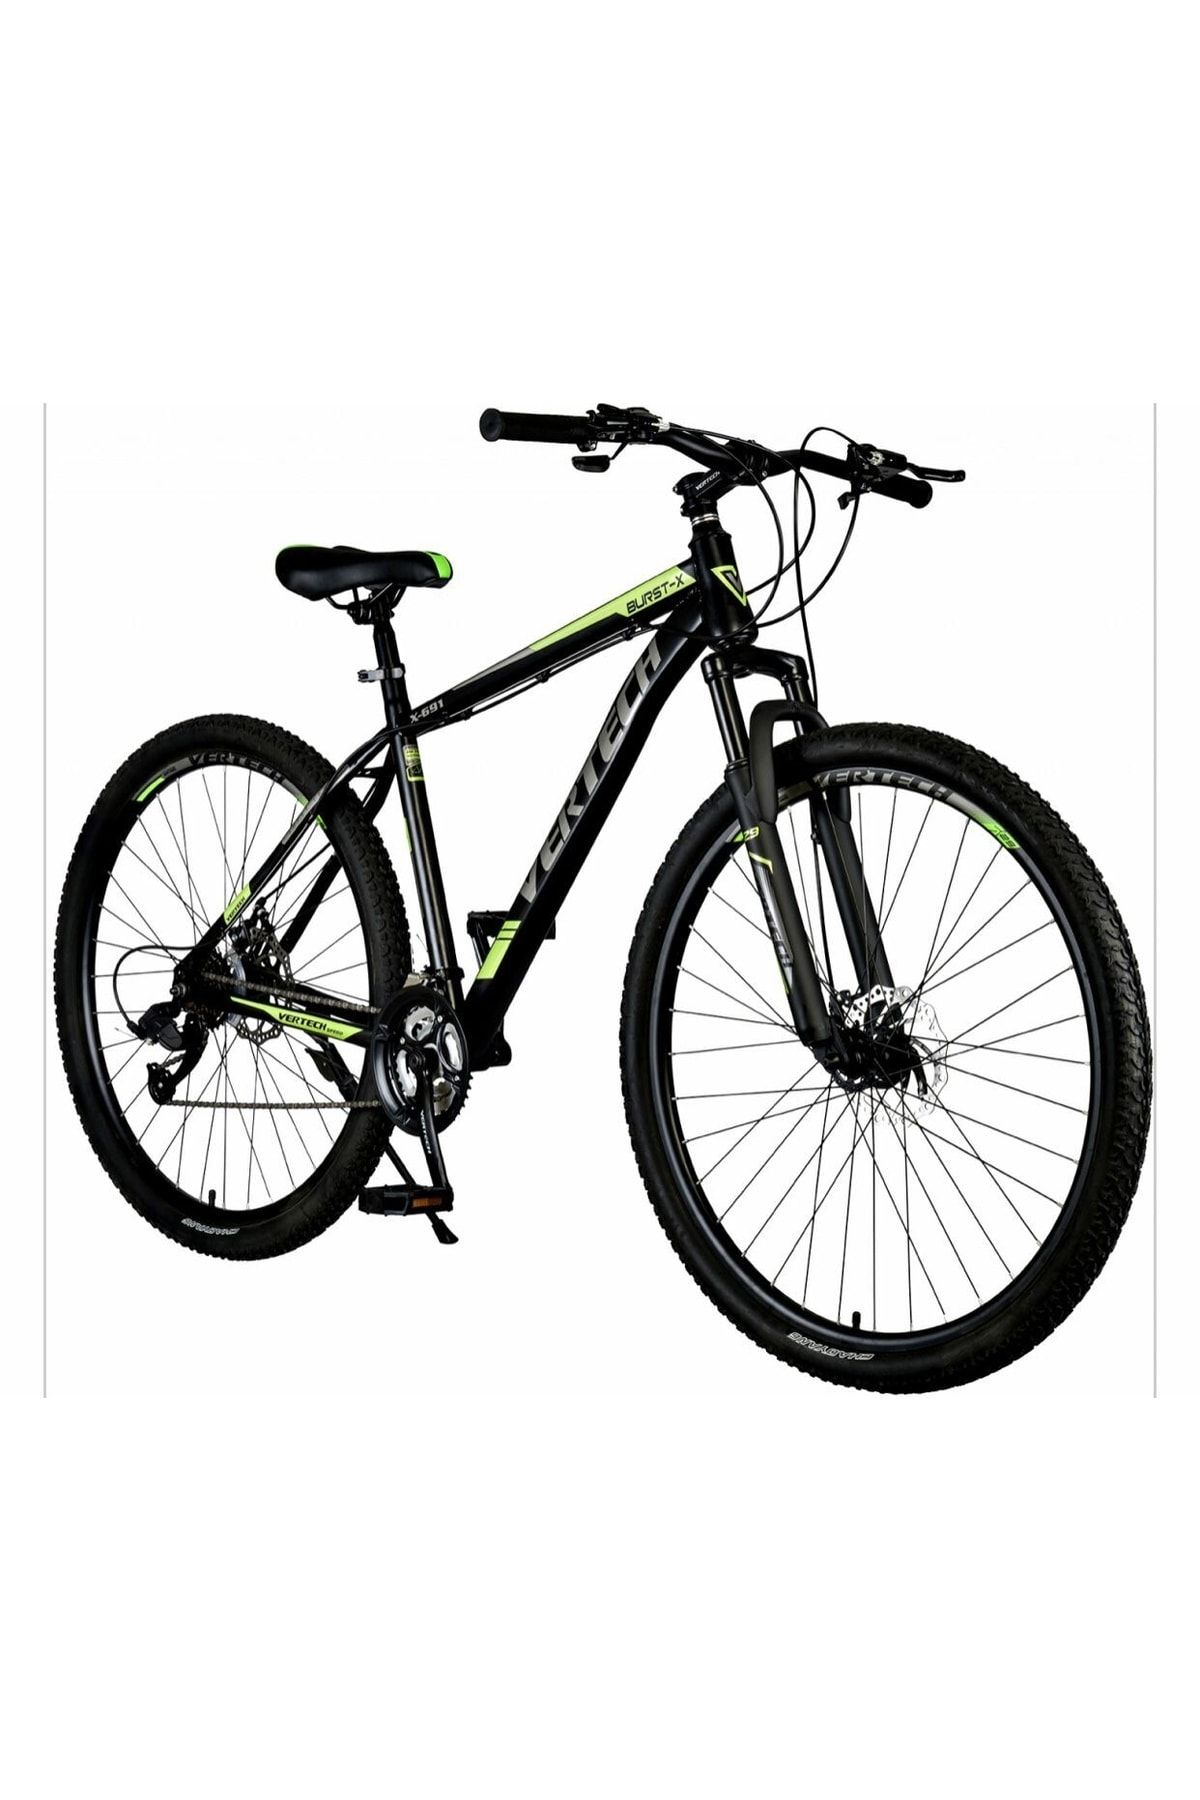 Vertech Burst-x 27-5 Jant Yeşil Bisiklet 21 Vites Disk Fren Dağ Bisikleti